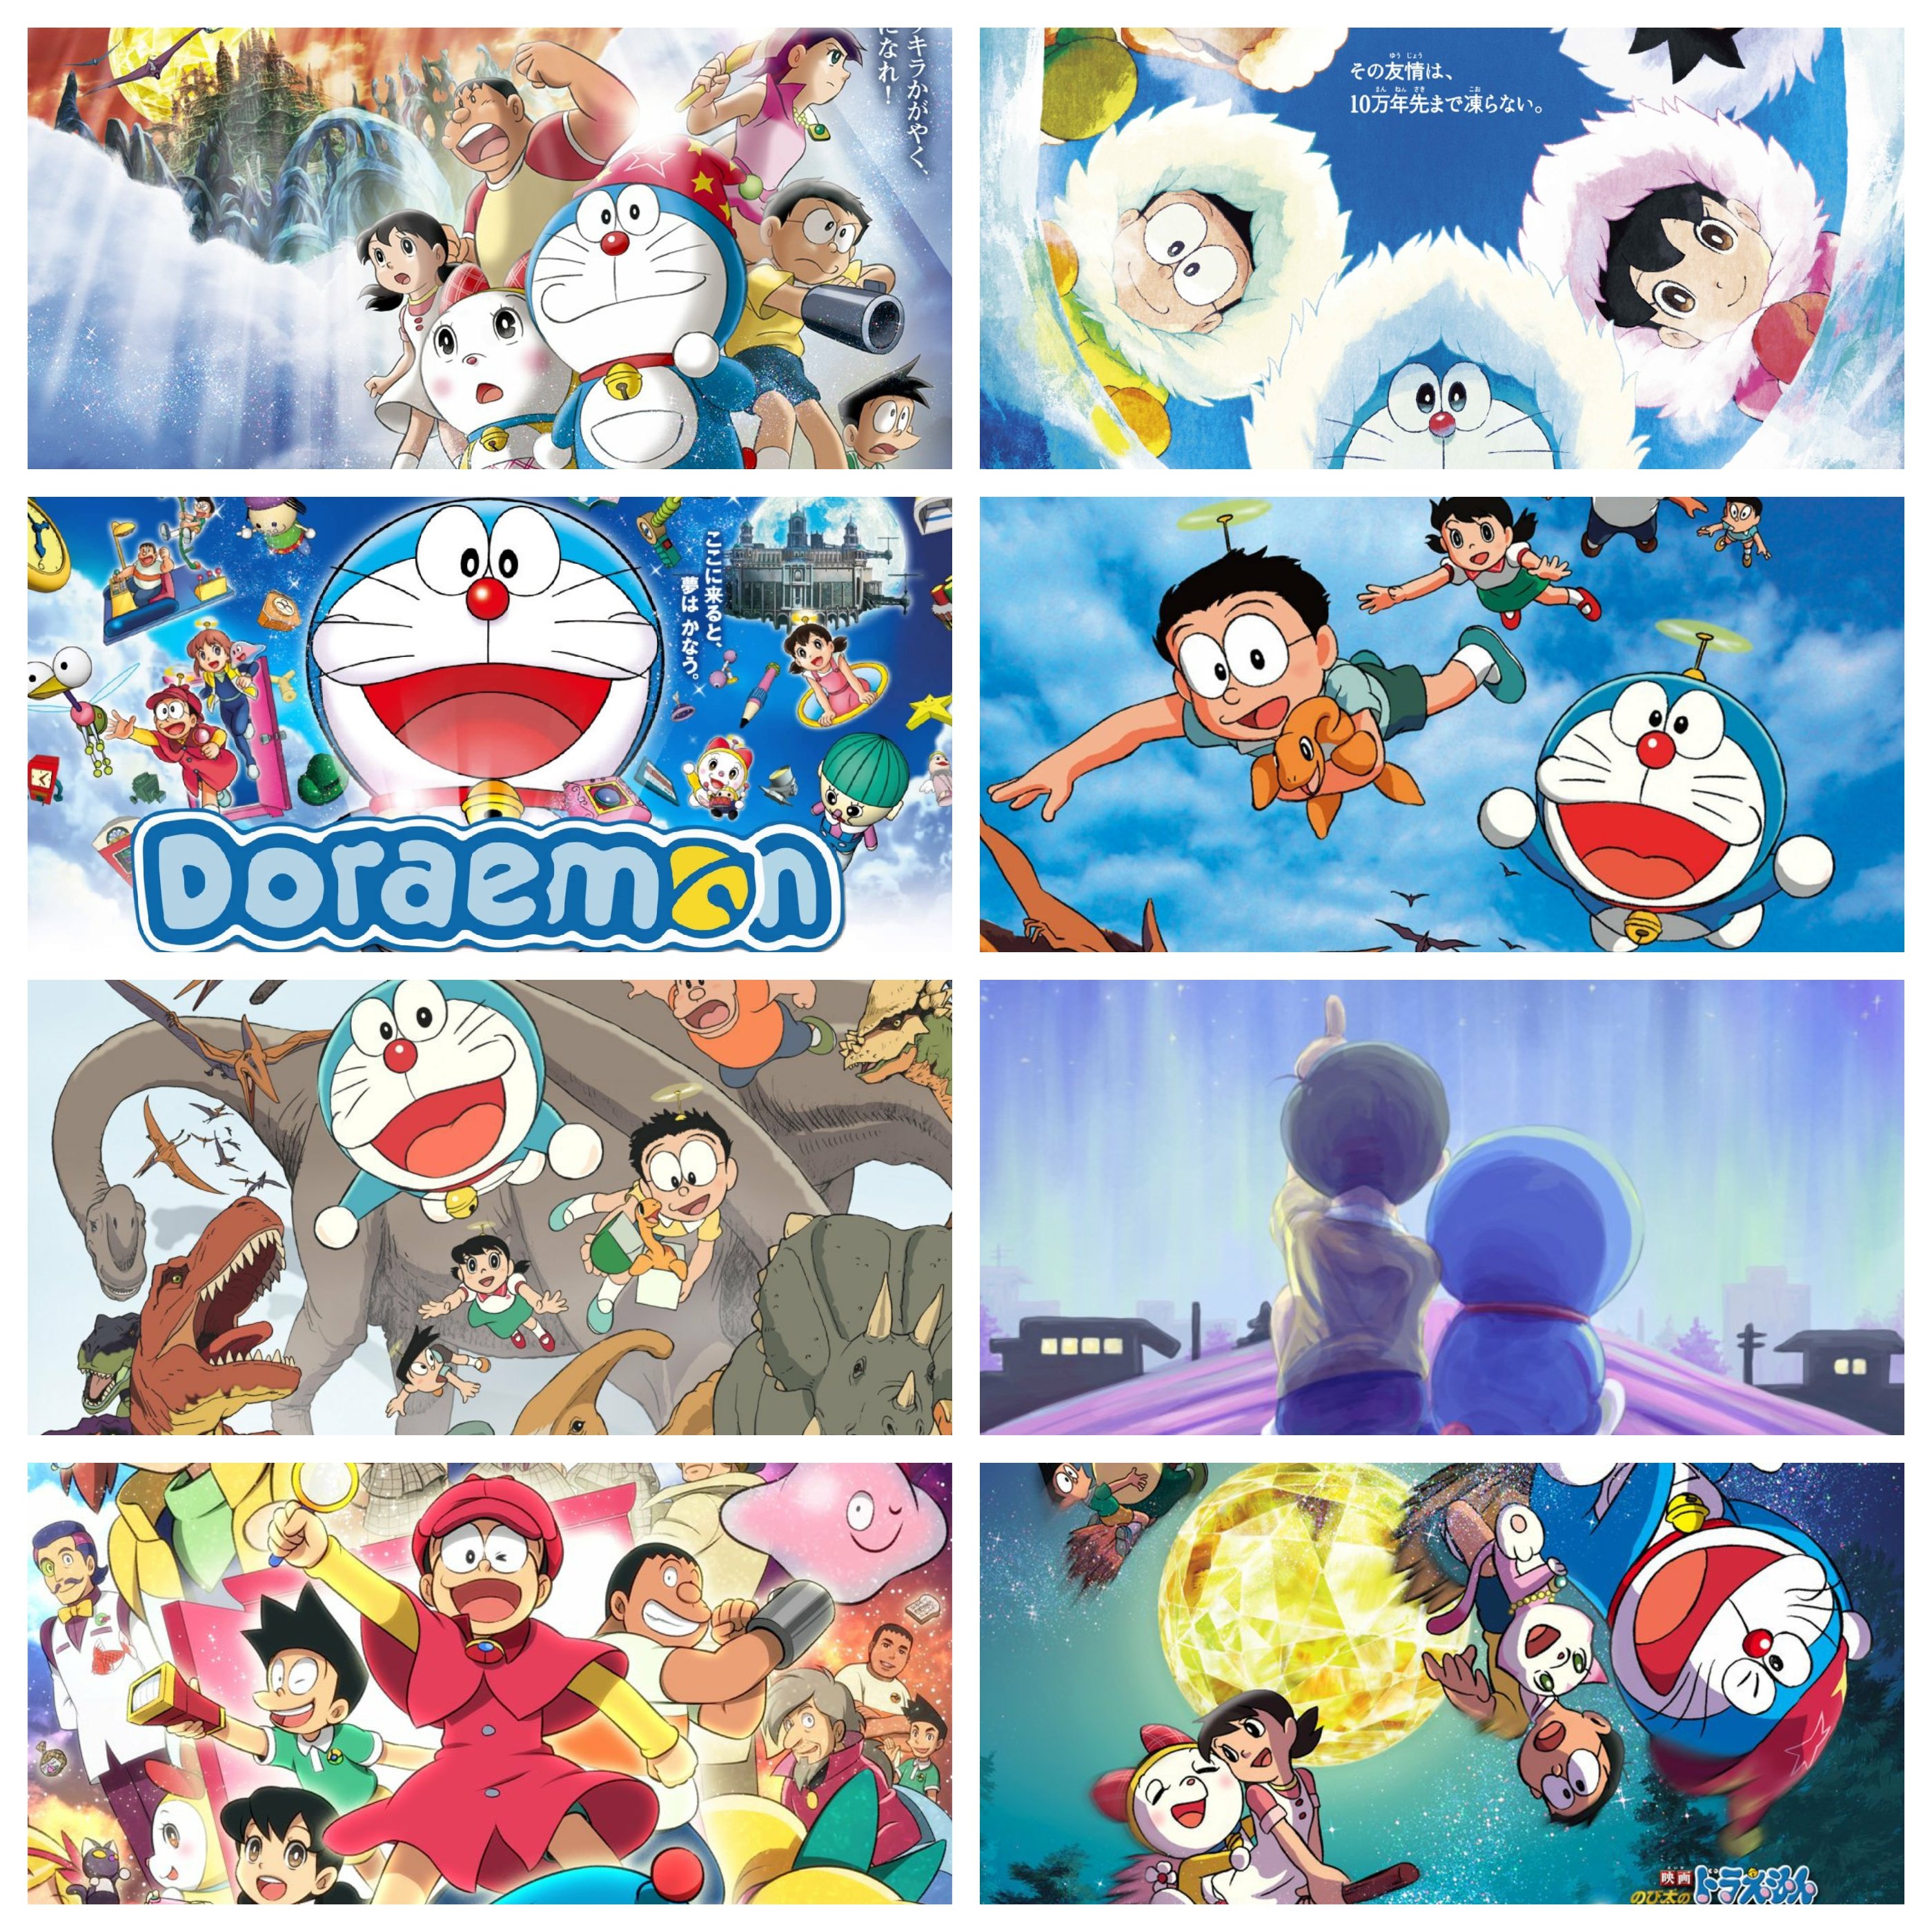 Doraemon/Anime | Wikia Lồng Tiếng | Fandom